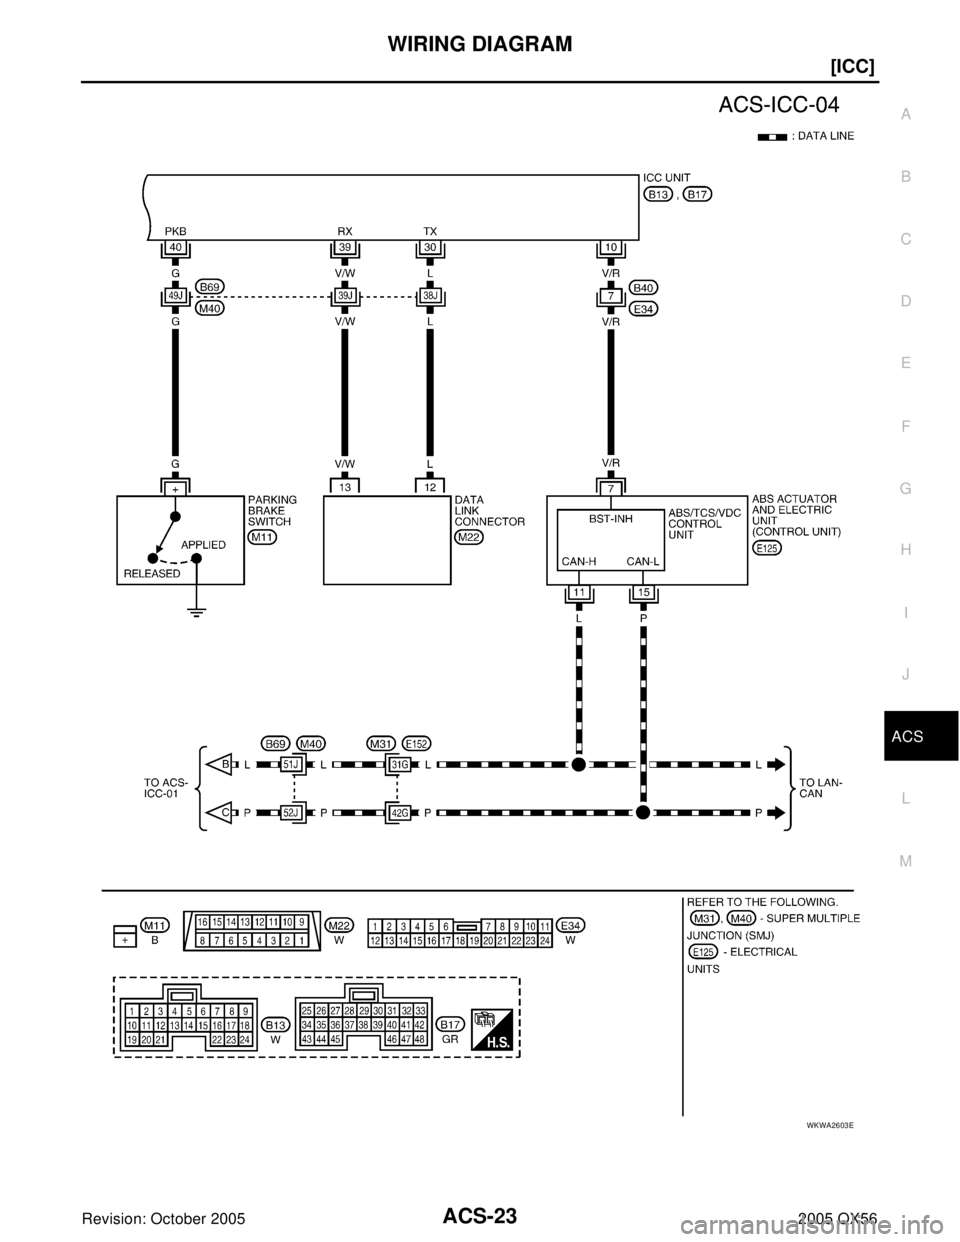 INFINITI QX4 2005  Factory Service Manual WIRING DIAGRAM
ACS-23
[ICC]
C
D
E
F
G
H
I
J
L
MA
B
ACS
Revision: October 20052005 QX56
WKWA2603E 